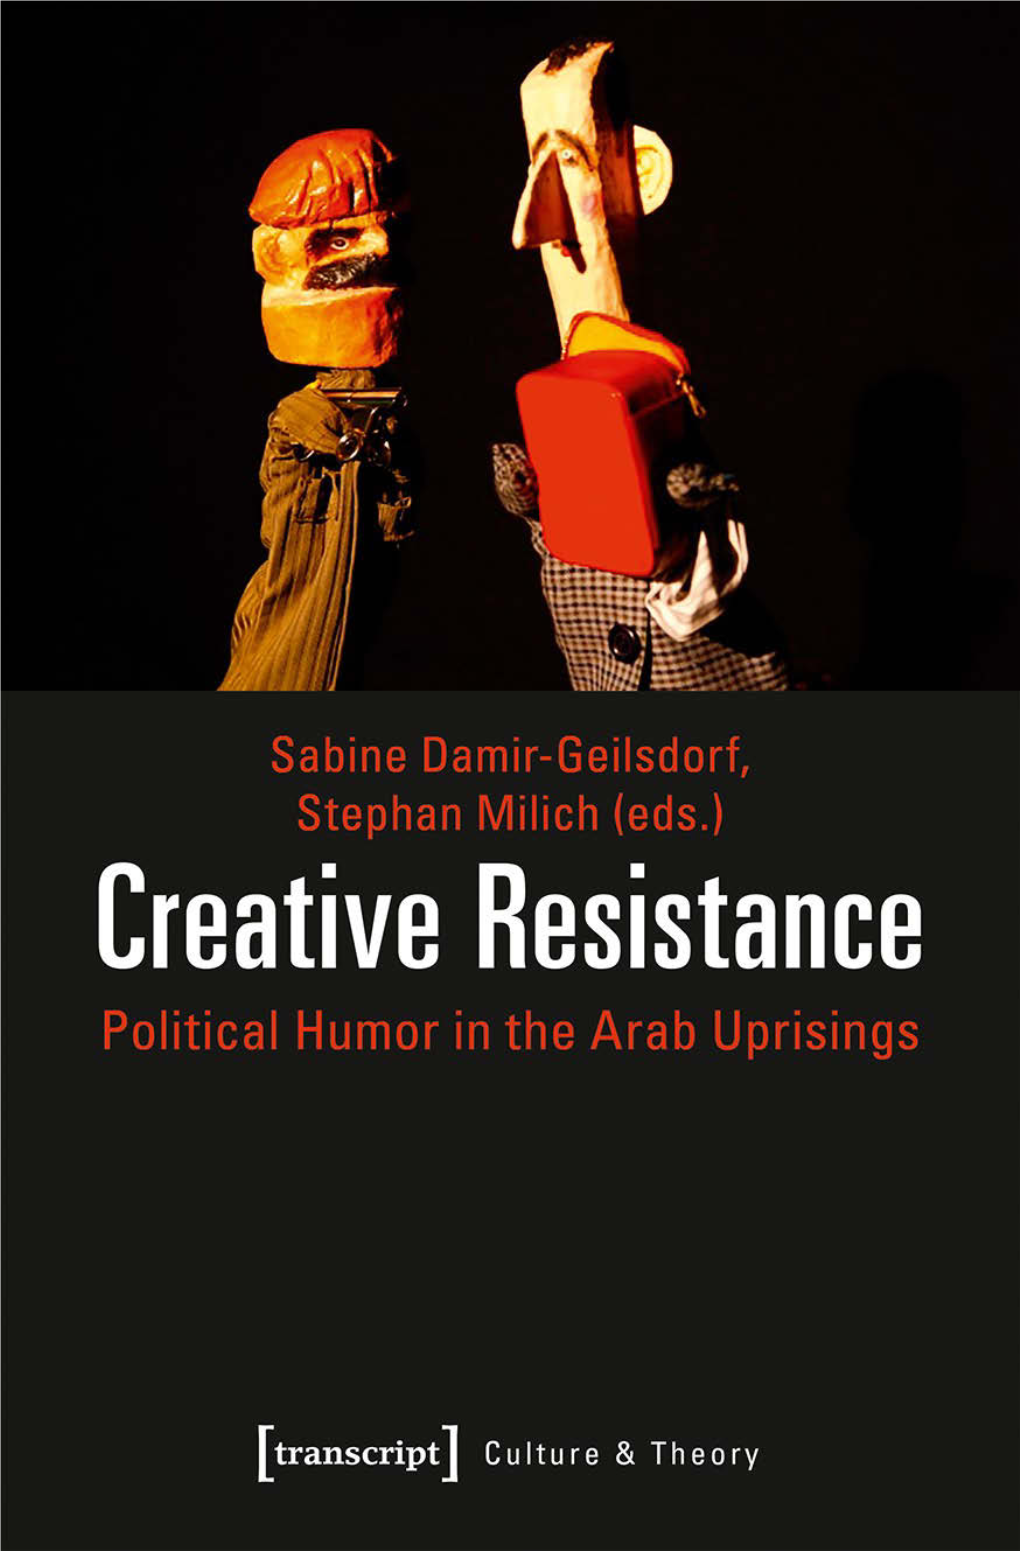 Political Humor in the Arab Uprisings